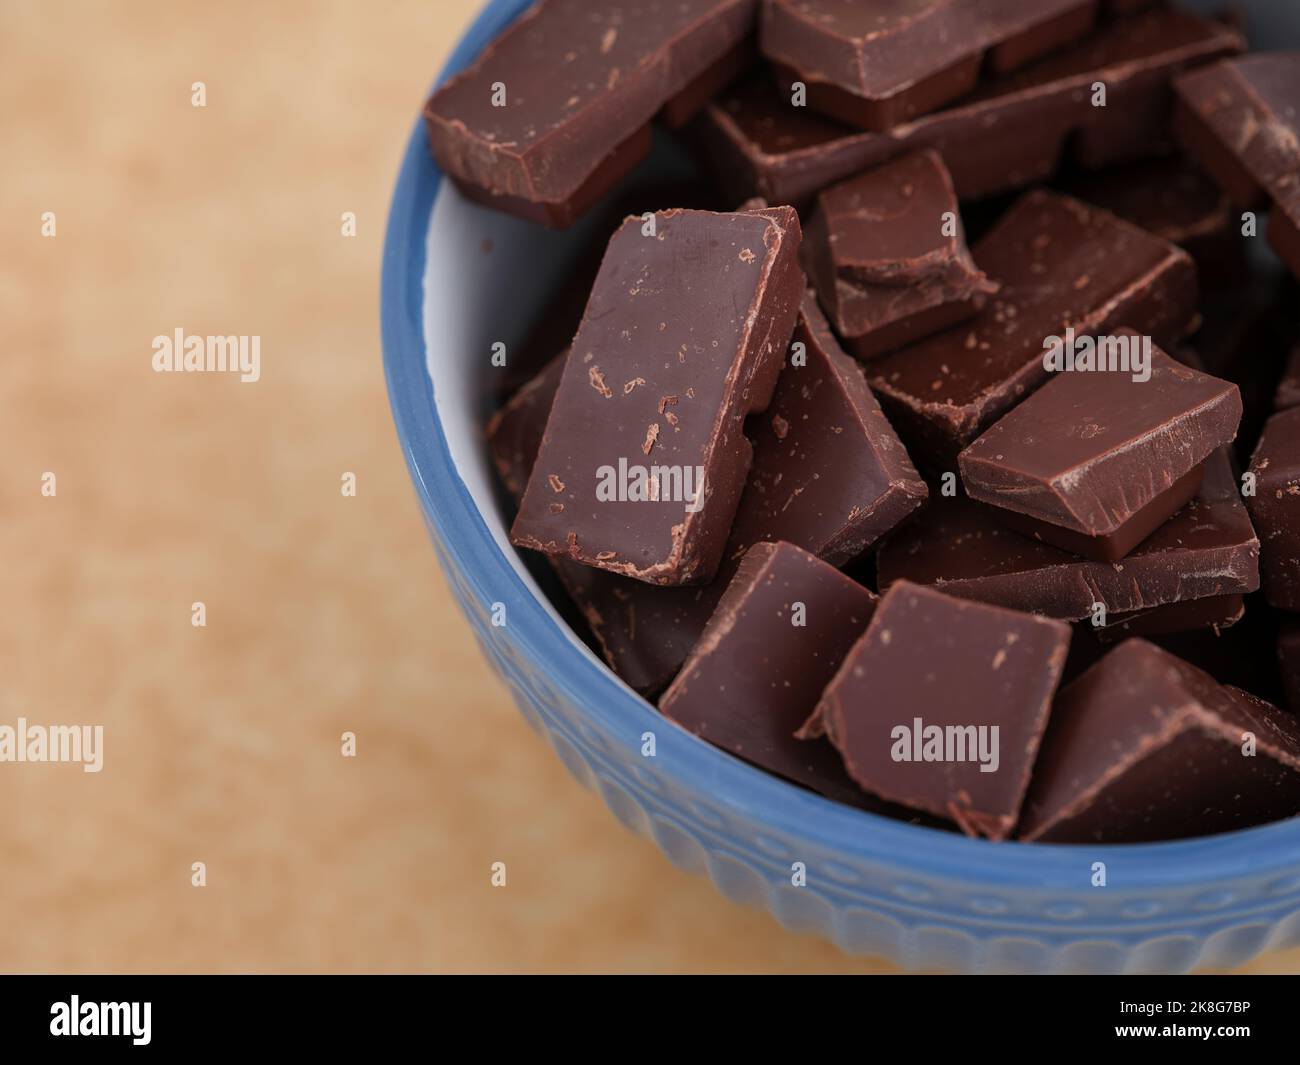 A bowl of broken dark chocolate. Close up. Stock Photo